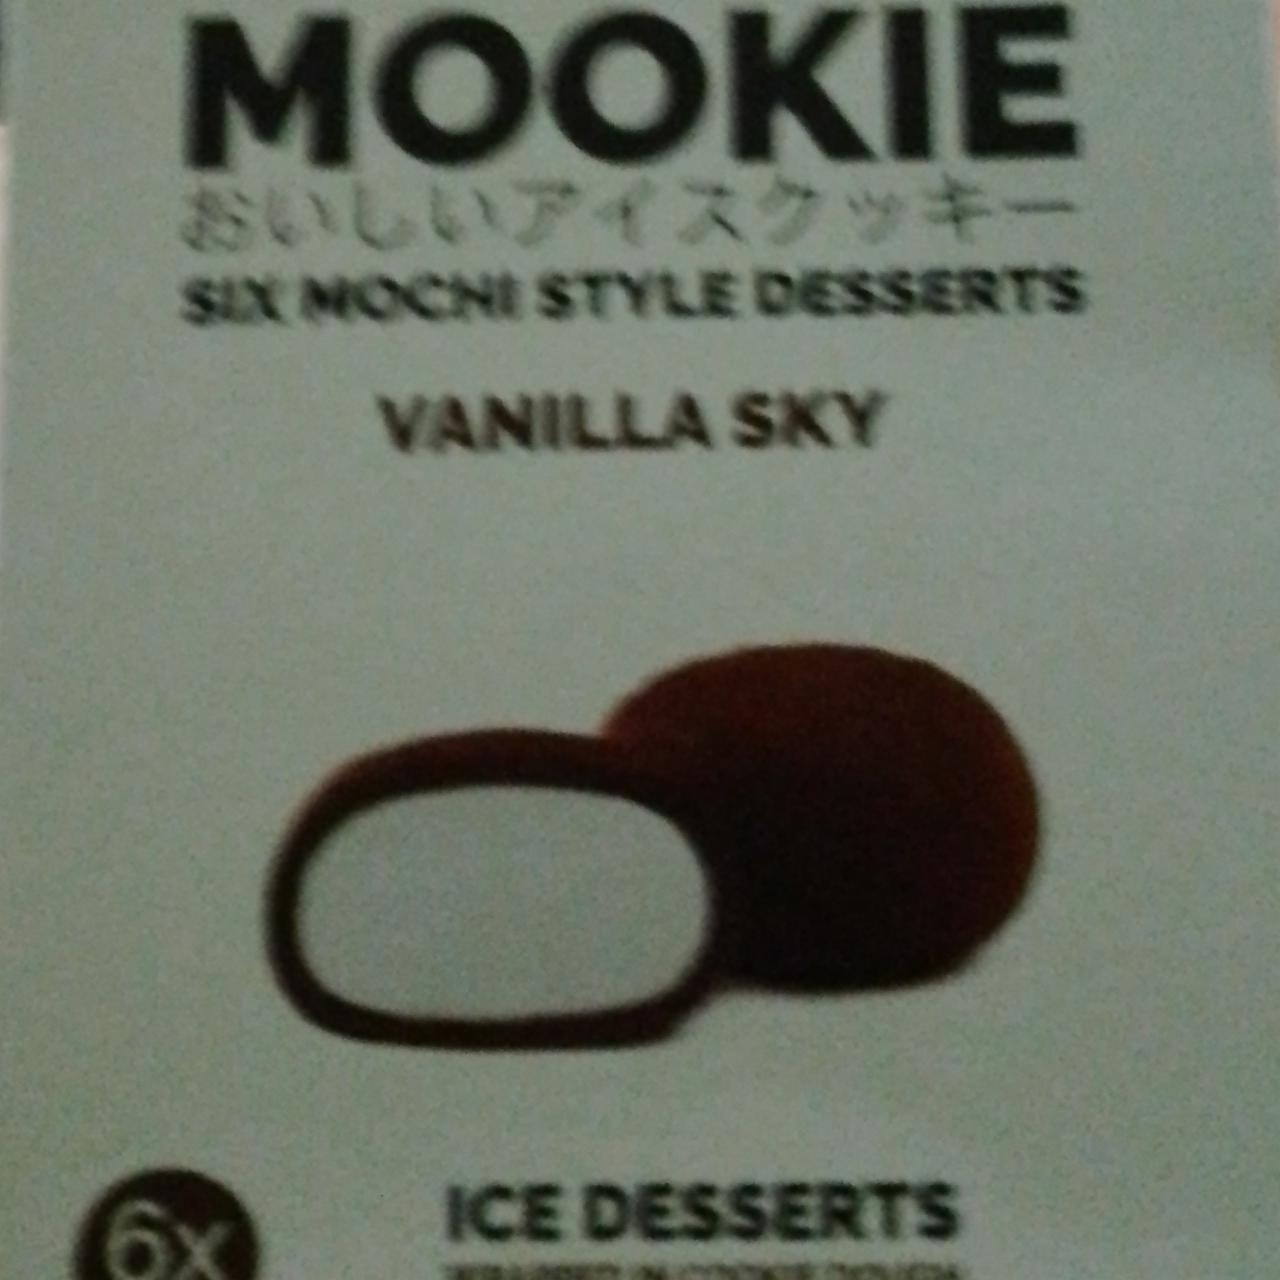 Zdjęcia - Ice desserts vanilla sky Mookie